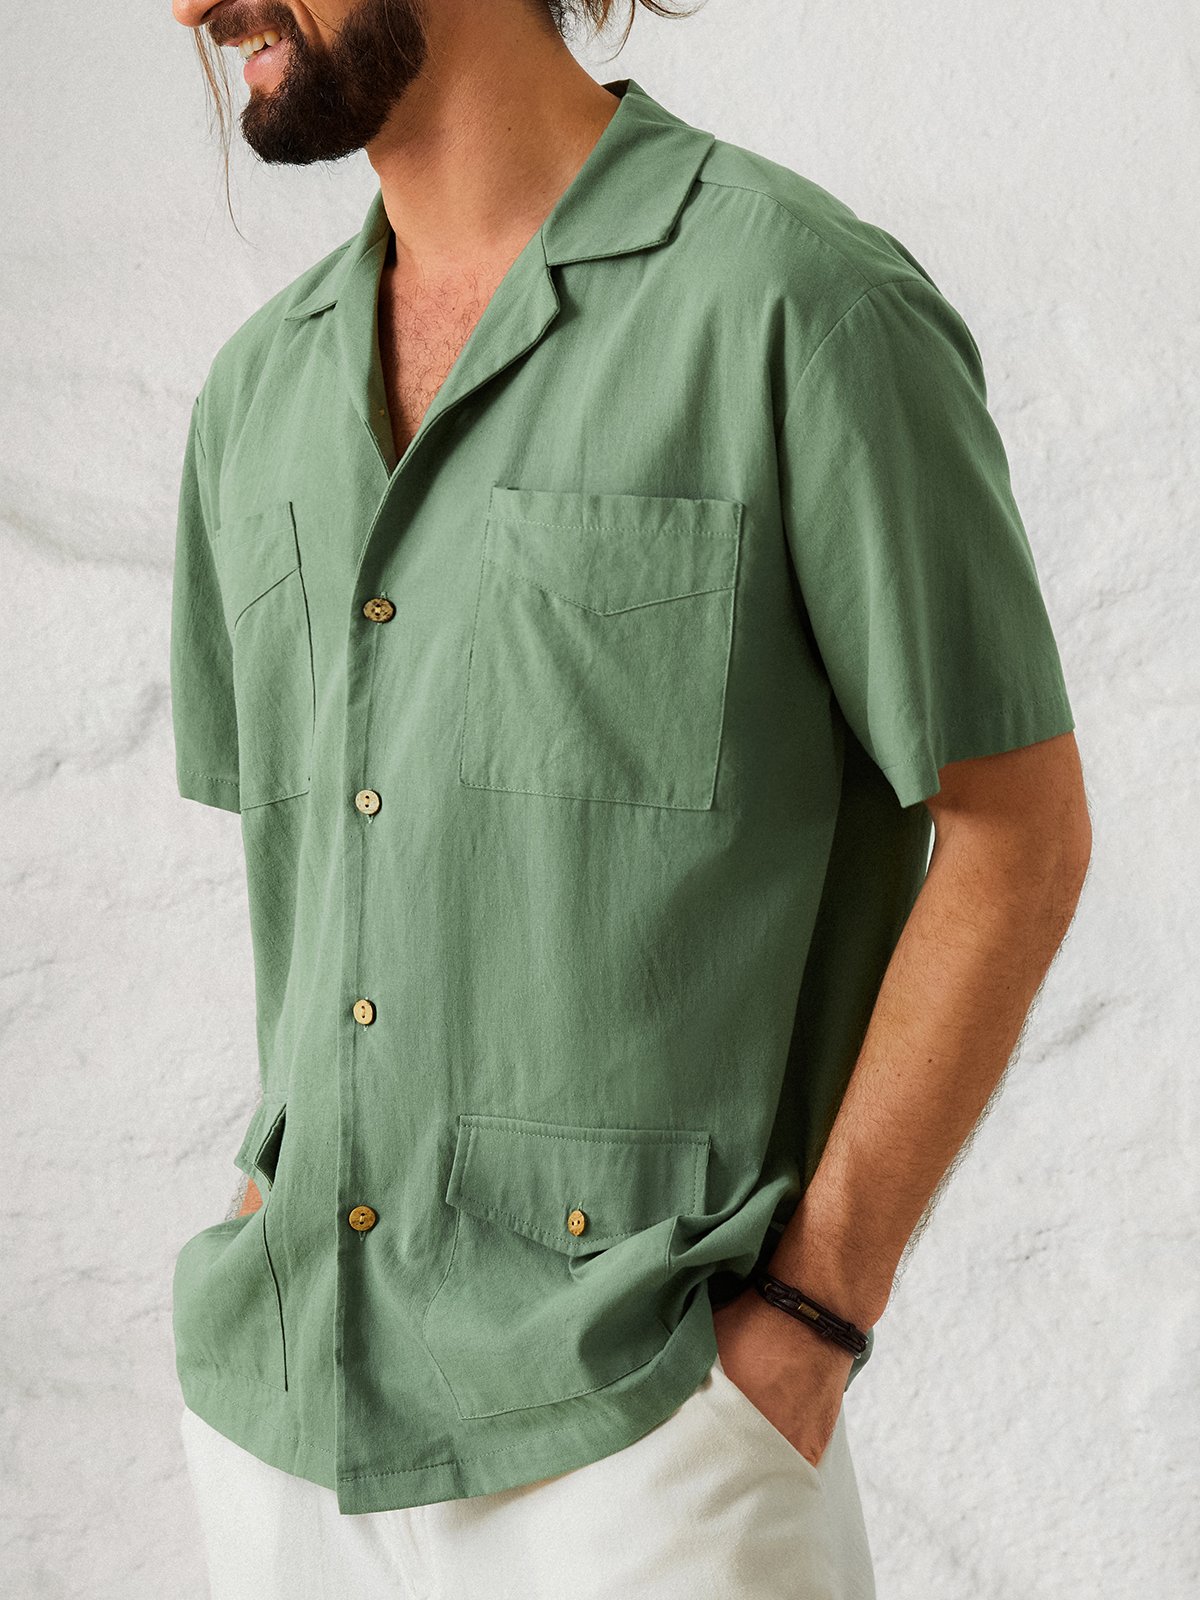 Hardaddy Cotton Linen Style American Casual Basic Linen Shirt